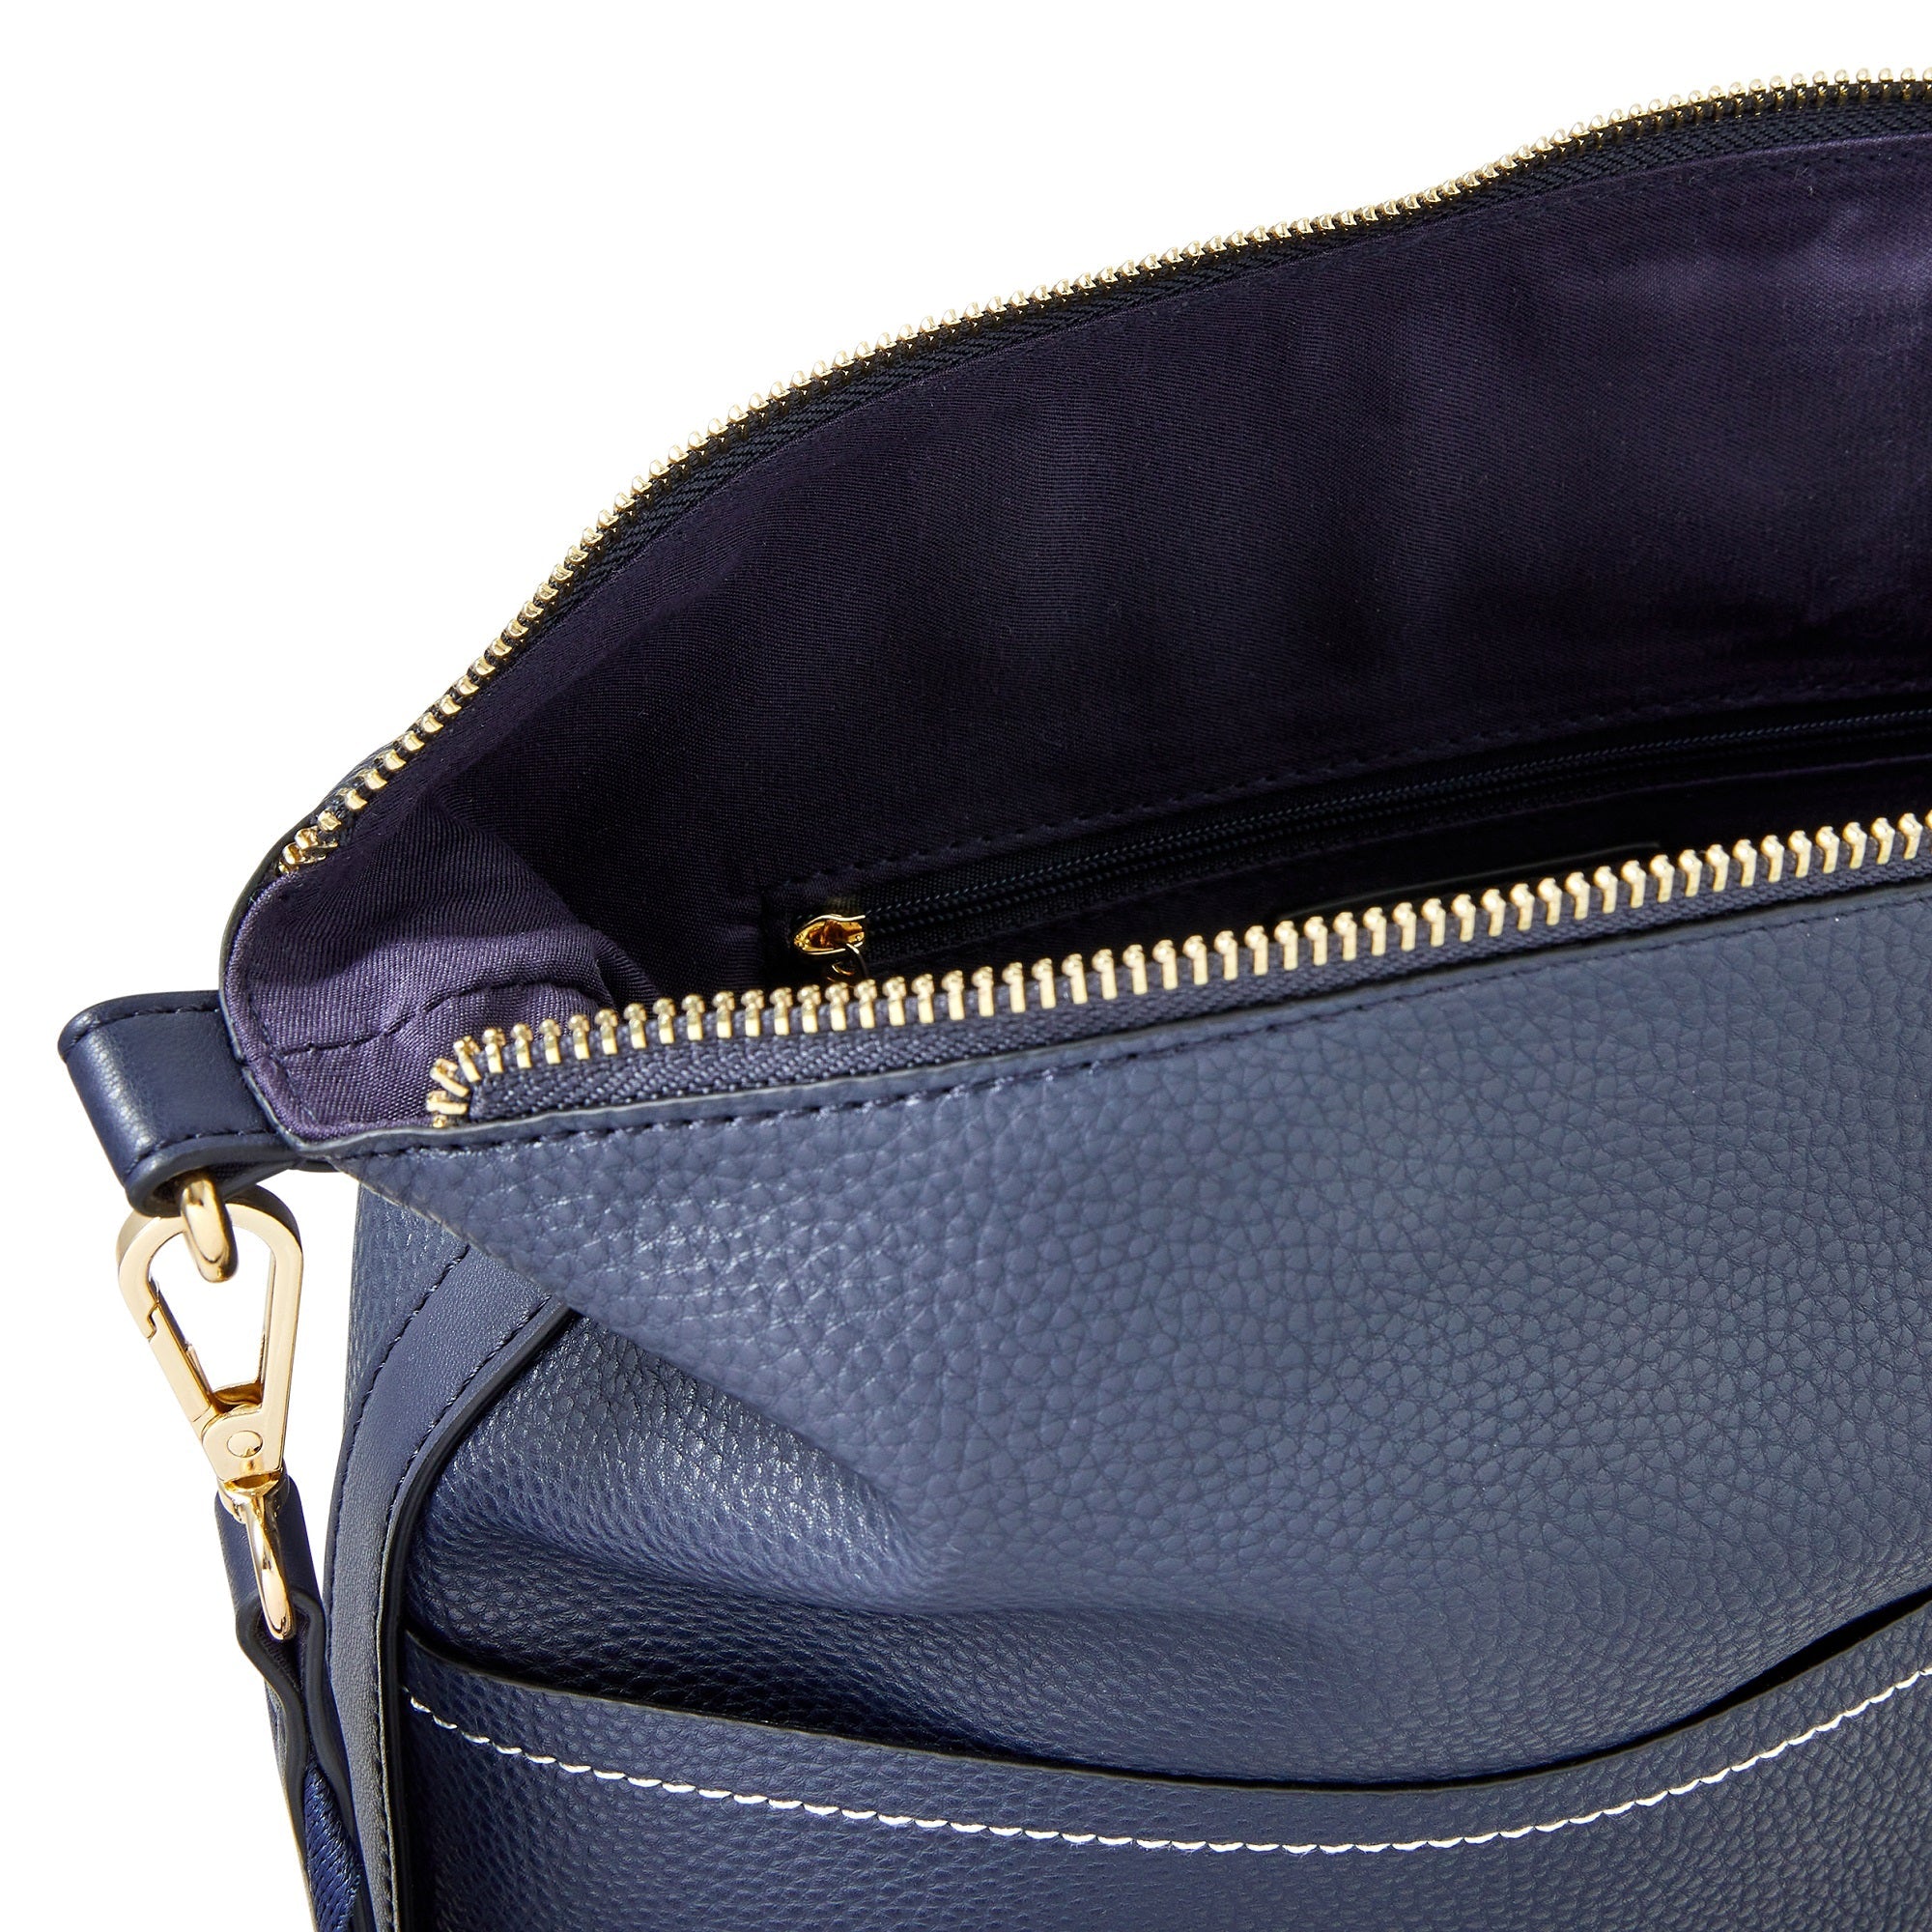 Accessorize London women's Faux Leather Navy Sasha Stitch Shoulder Sling bag